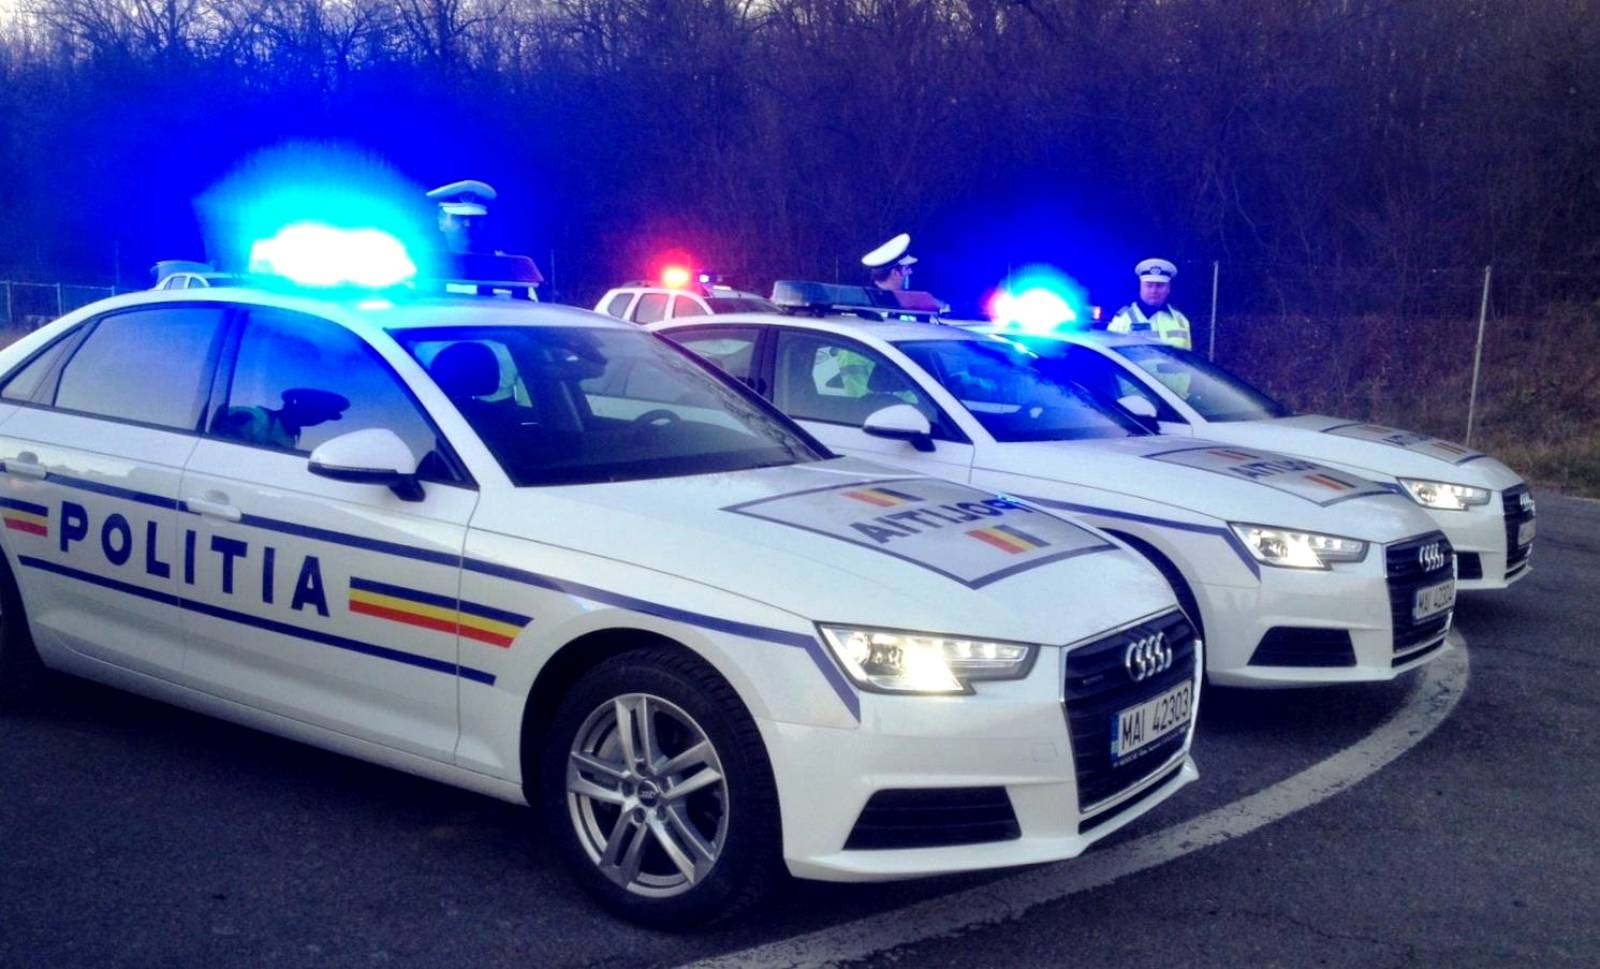 Attention Romanian Police selfie train